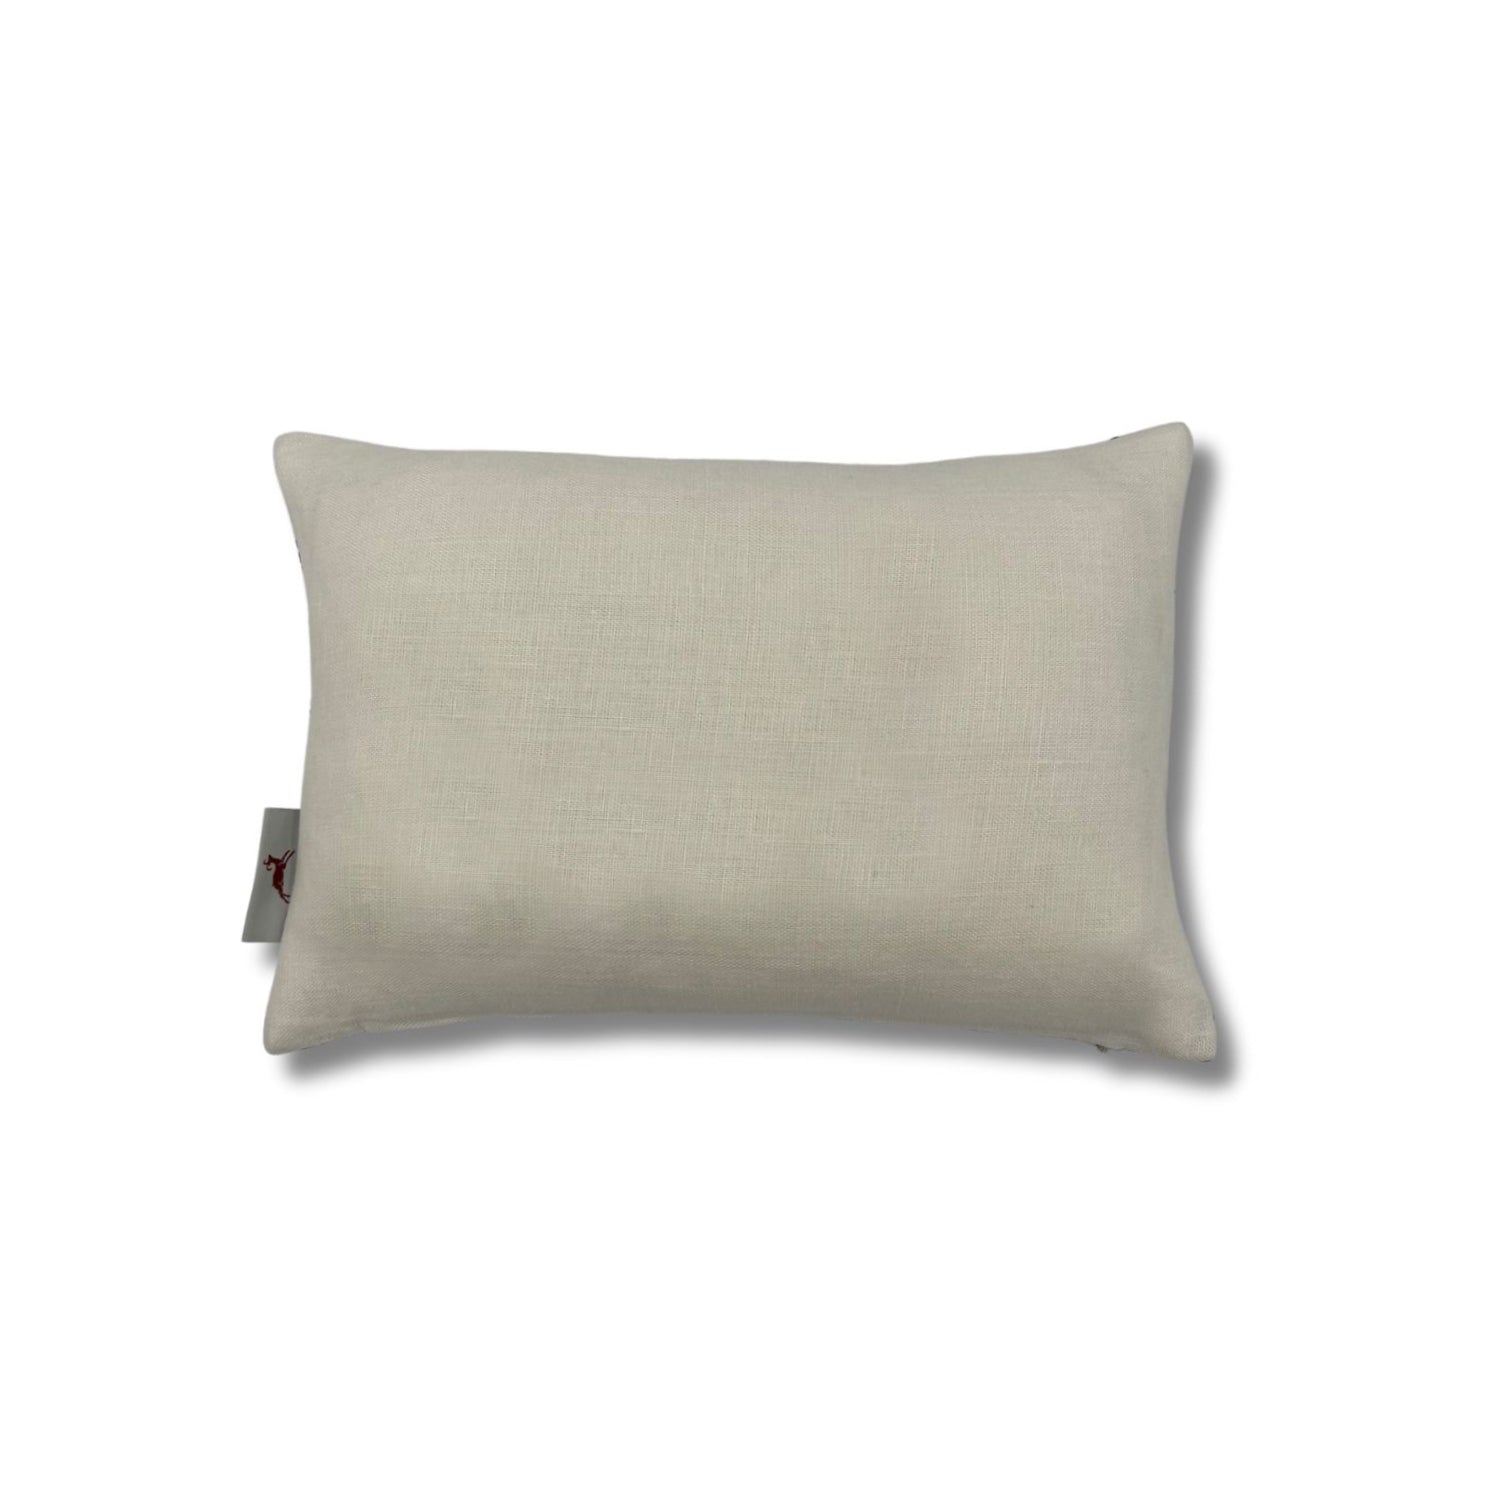 Rectangular throw pillow in solid cream linen. 